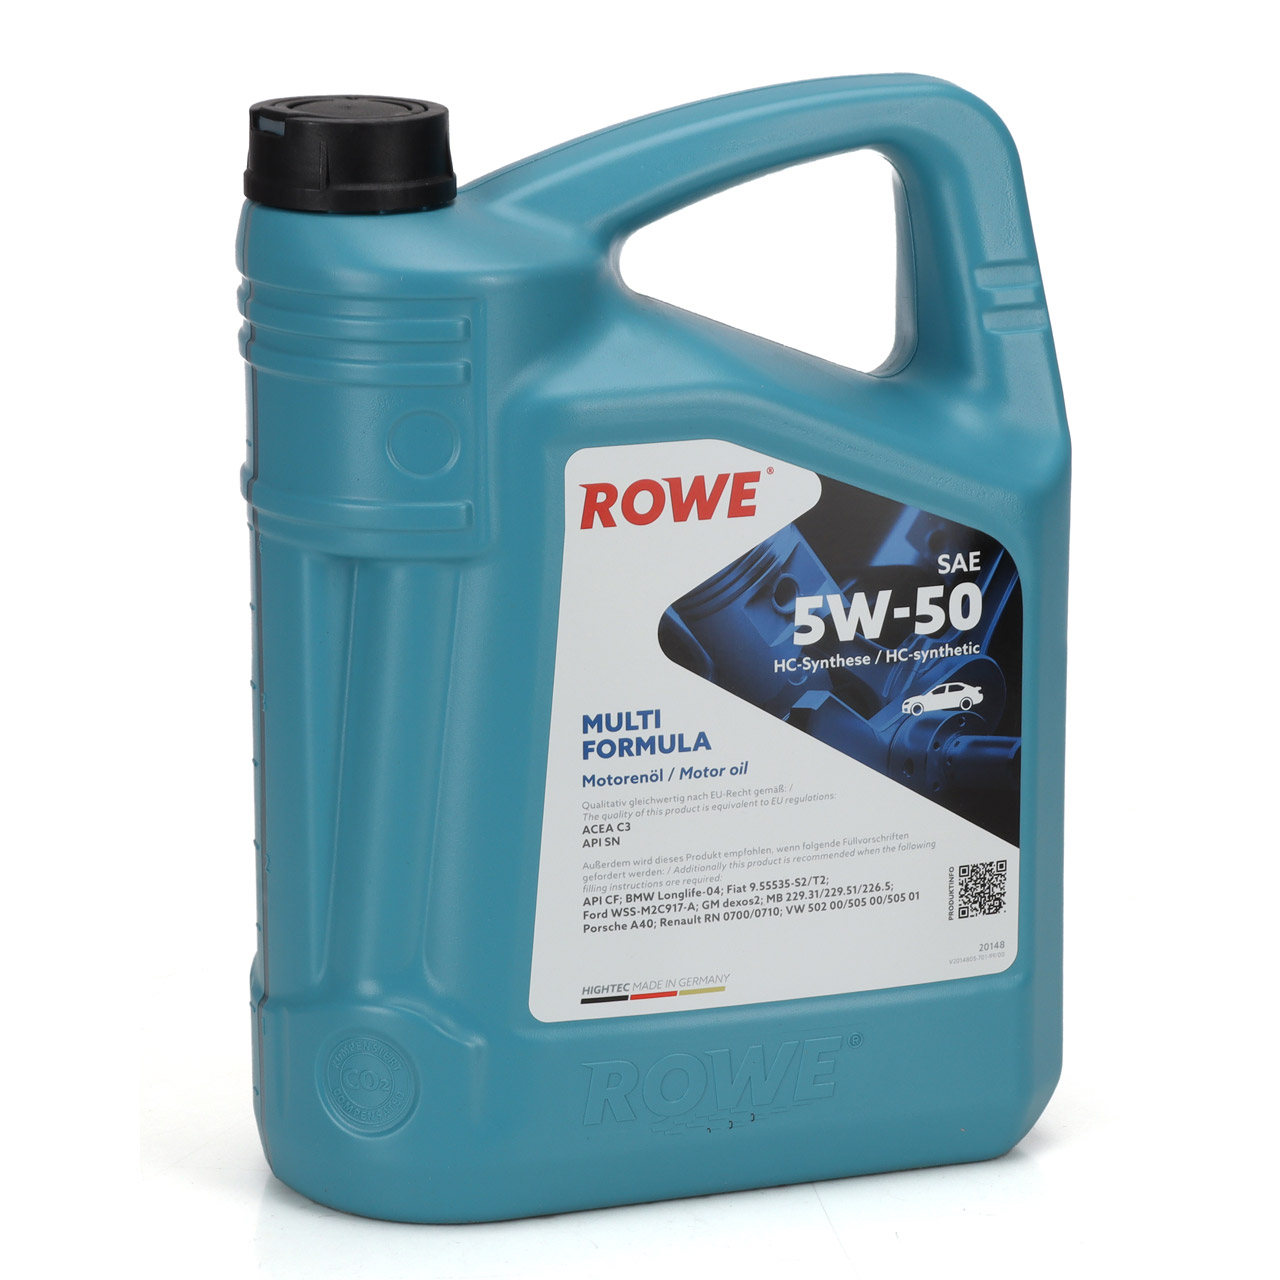 5L 5 Liter ROWE MULTI FORMULA 5W-50 Motoröl Öl ACEA C3 API SN BMW LL-04 VW 502/505.00